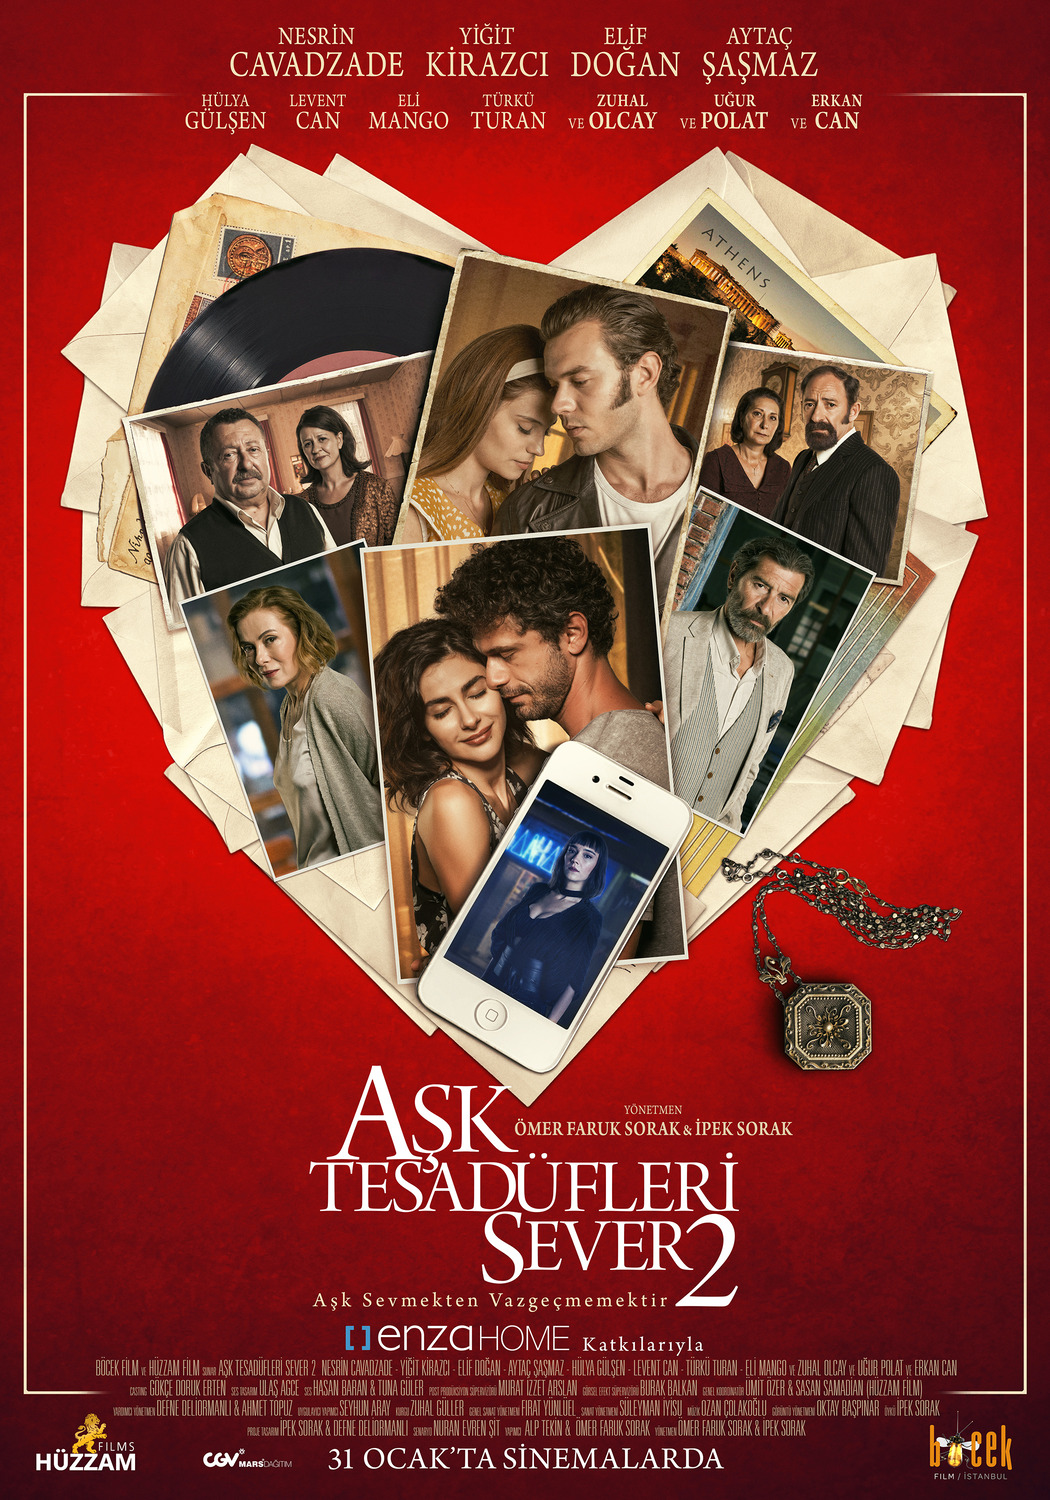 Extra Large Movie Poster Image for Ask Tesadüfleri Sever 2 (#2 of 2)